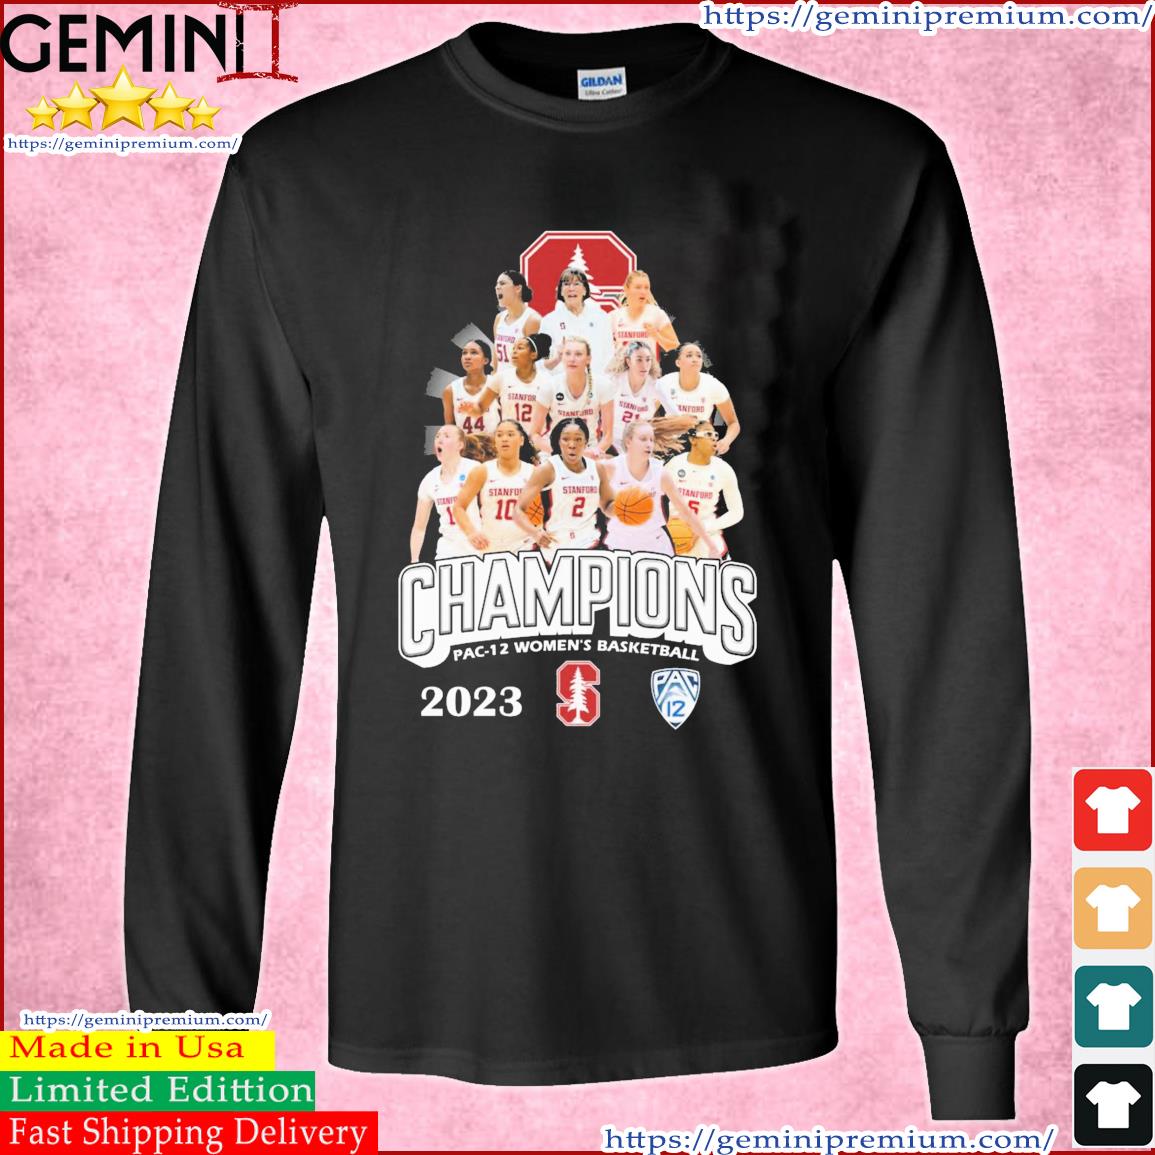 Stanford Cardinals Team PAC-12 Women's Basketball Champions 2023 Shirt Long Sleeve Tee